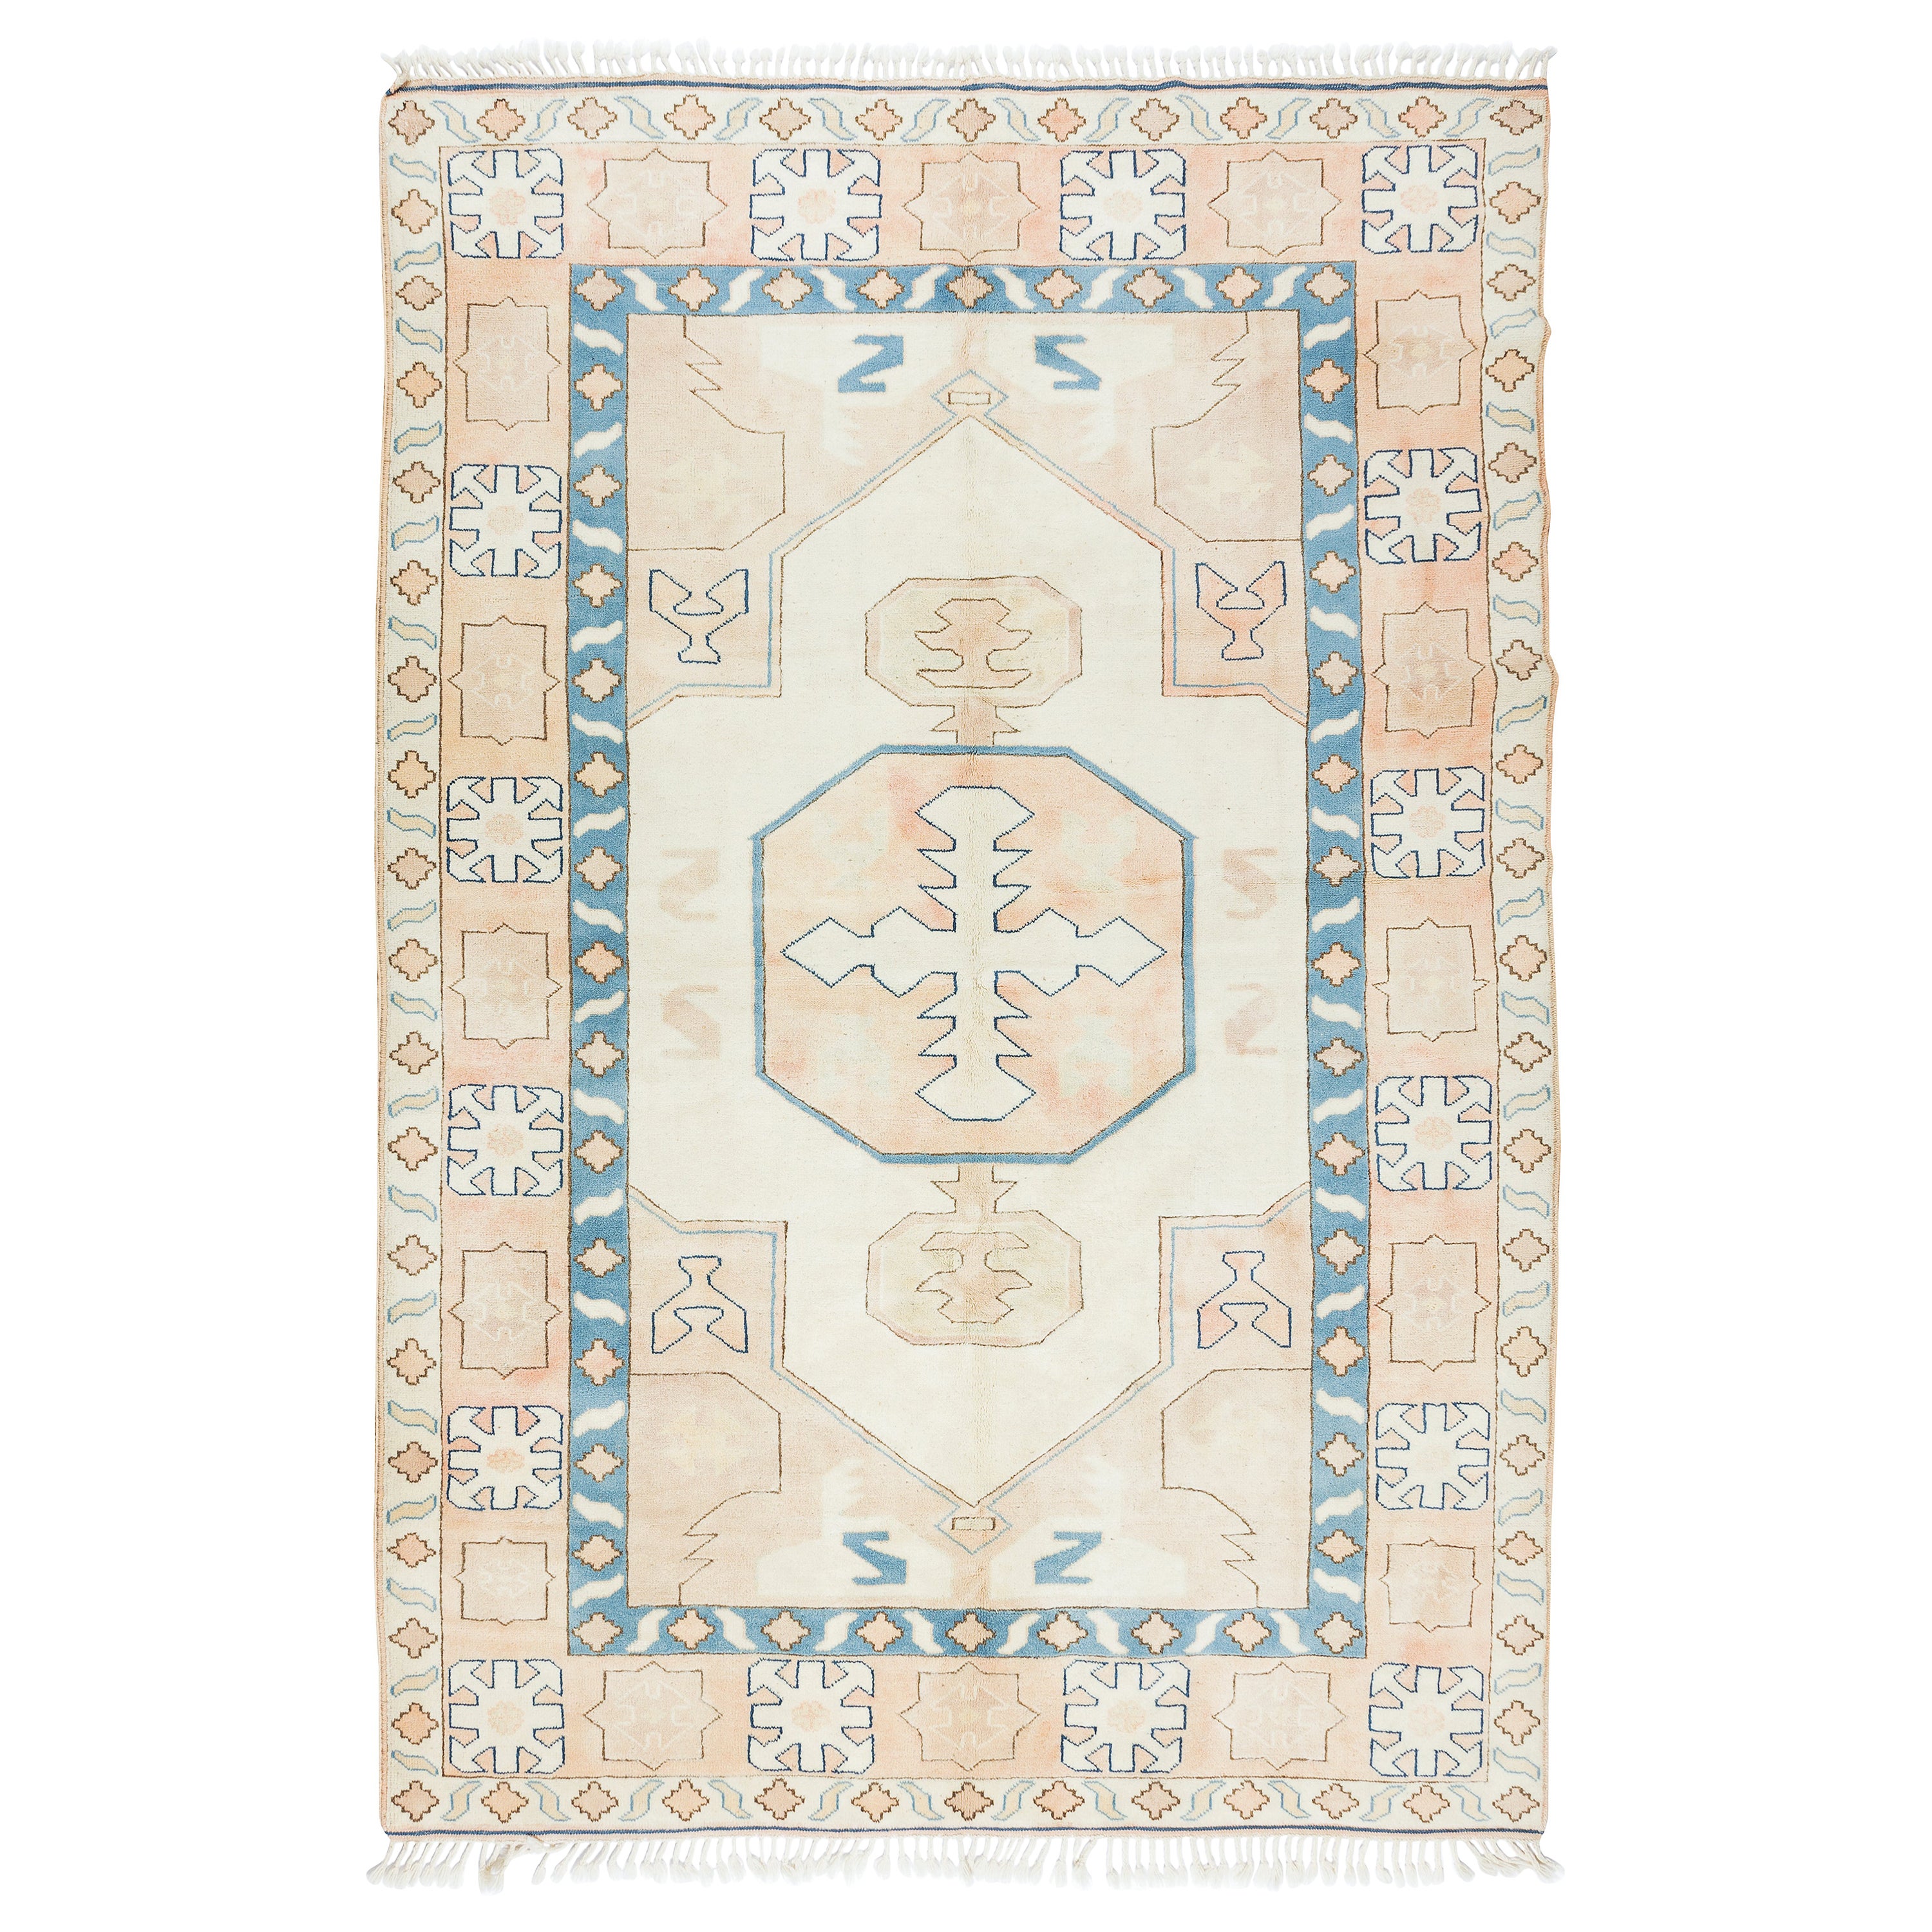 6.7x9.7 Ft Handmade Turkish Wool Area Rug, Modern Geometric Patterned Carpet